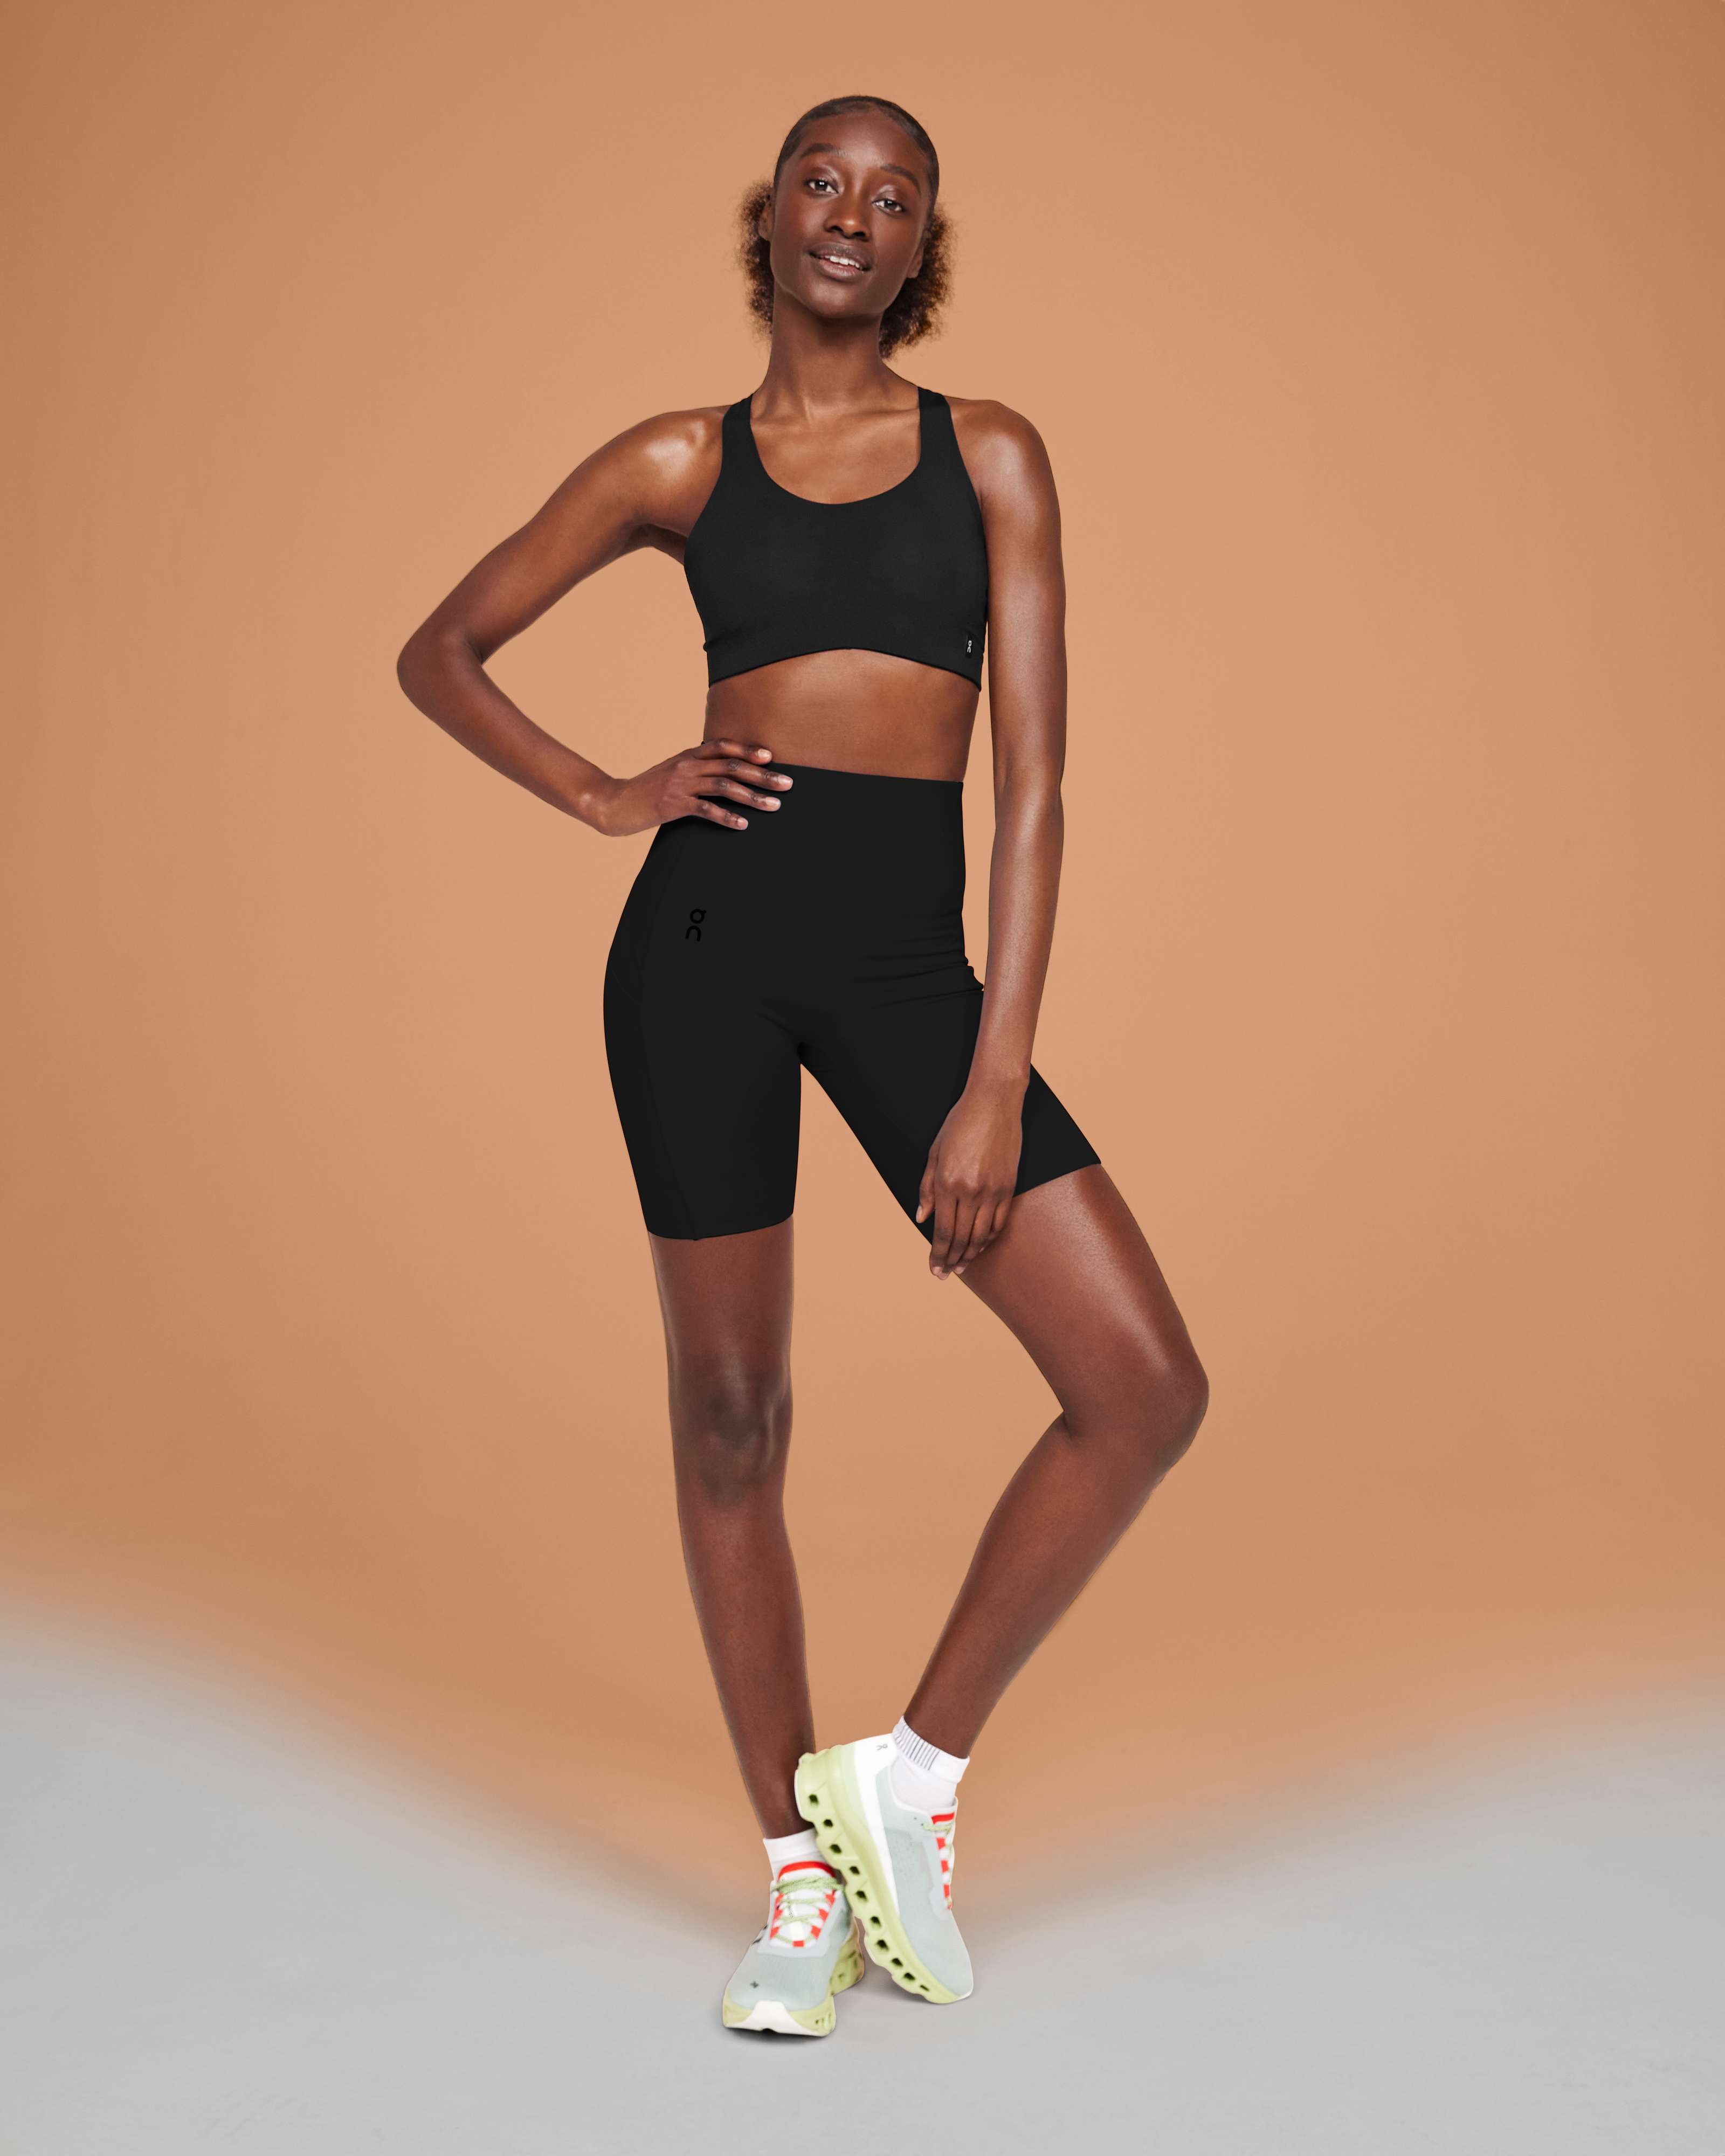 Woman Black Sportswear Leggings Shorts Top Stock Photo 1435246076